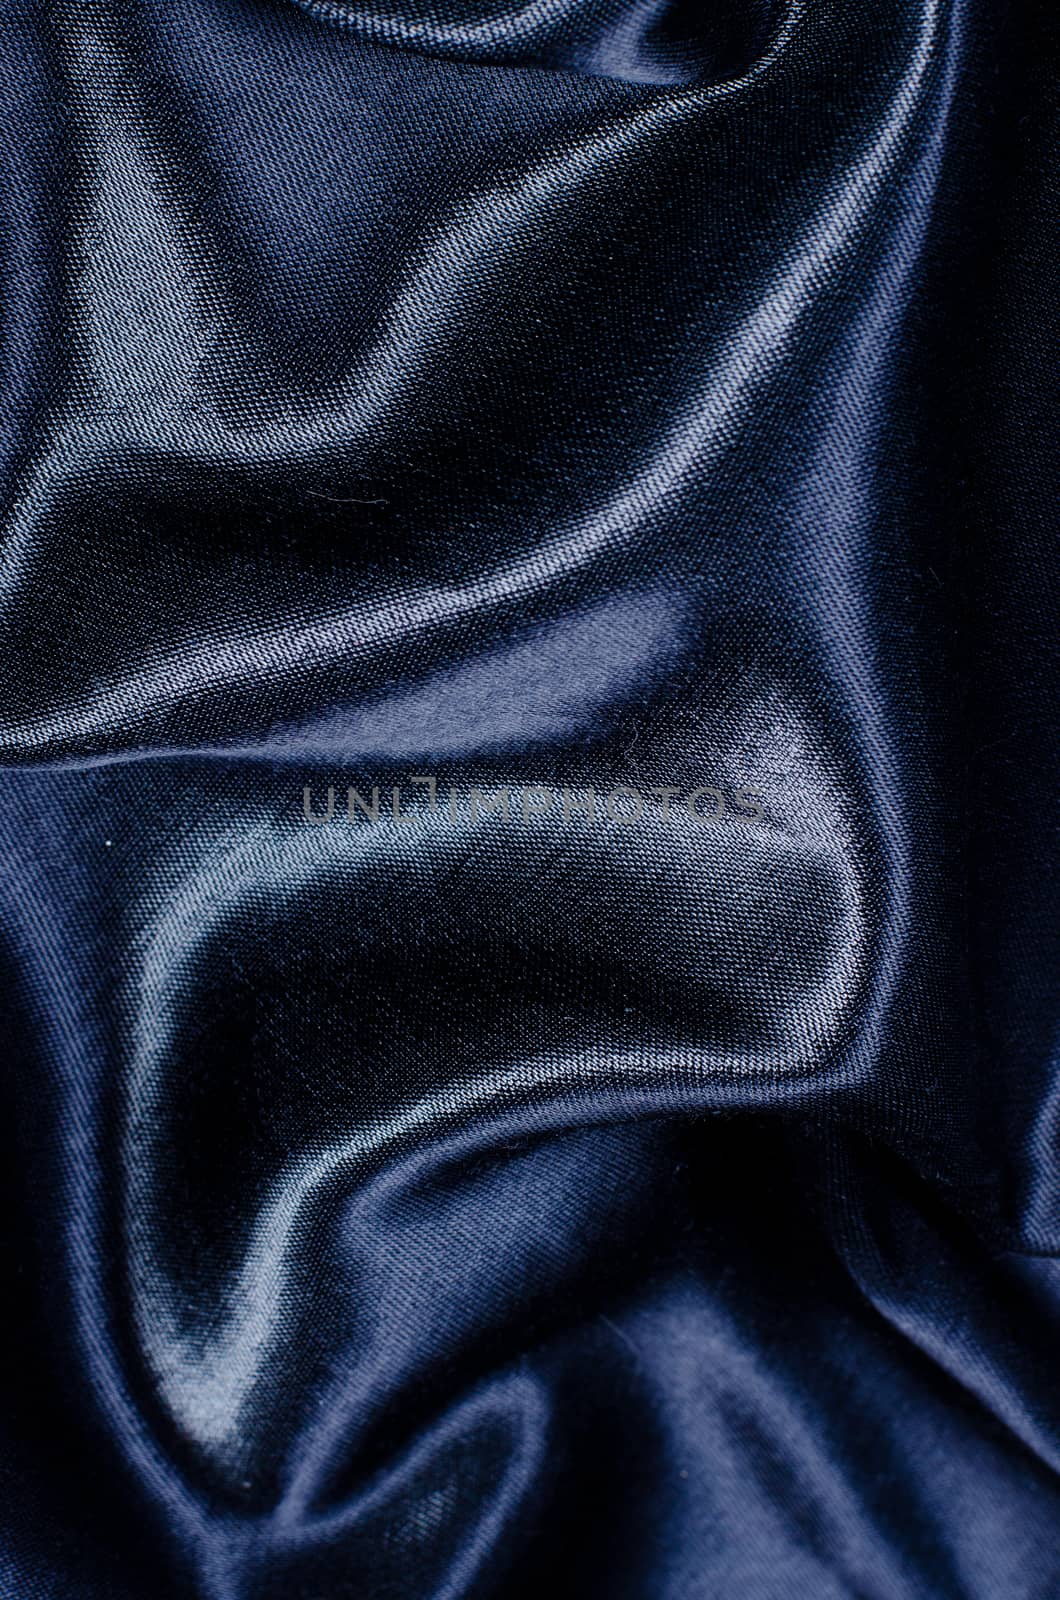 blue silk satin background by sarkao